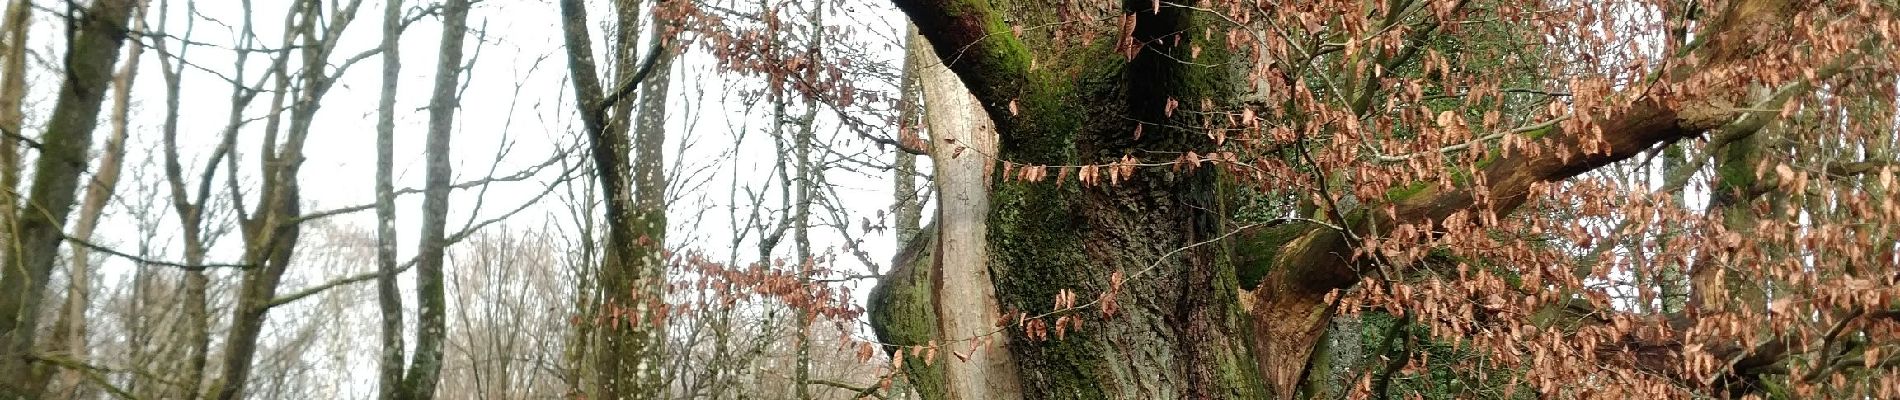 Point d'intérêt Havelange - chêne au gibet - Photo